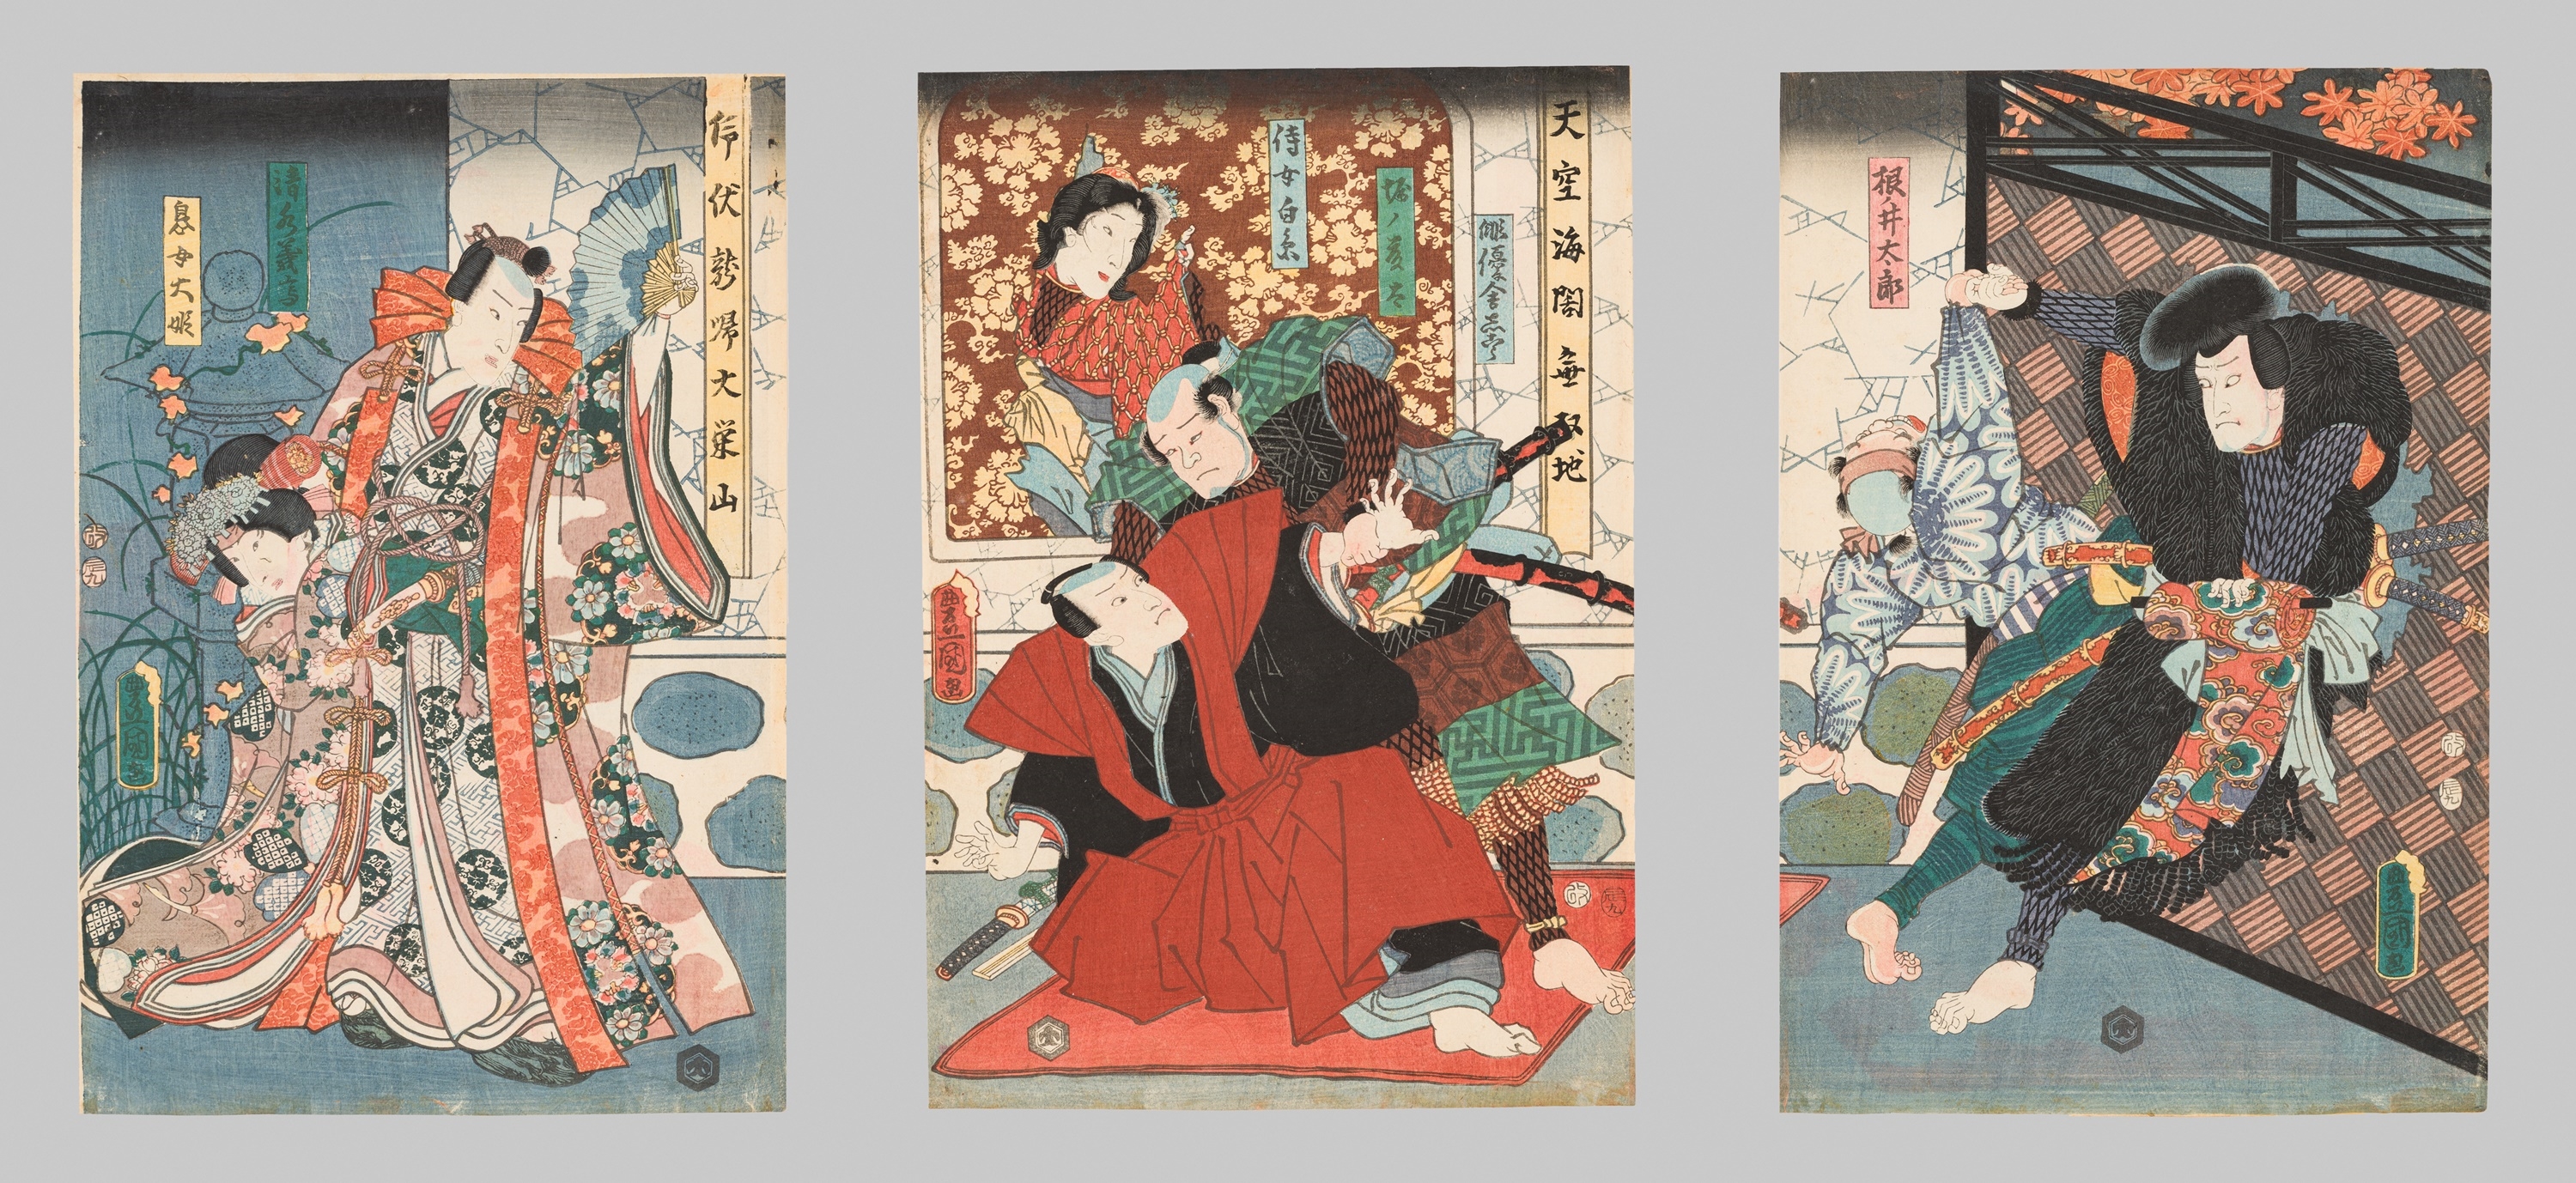 UTAGAWA KUNISADA I AND UTAGAWA HIROSHIGE II: TRIPTYCH OF NENO-I TARO FIGHTING A GUARD